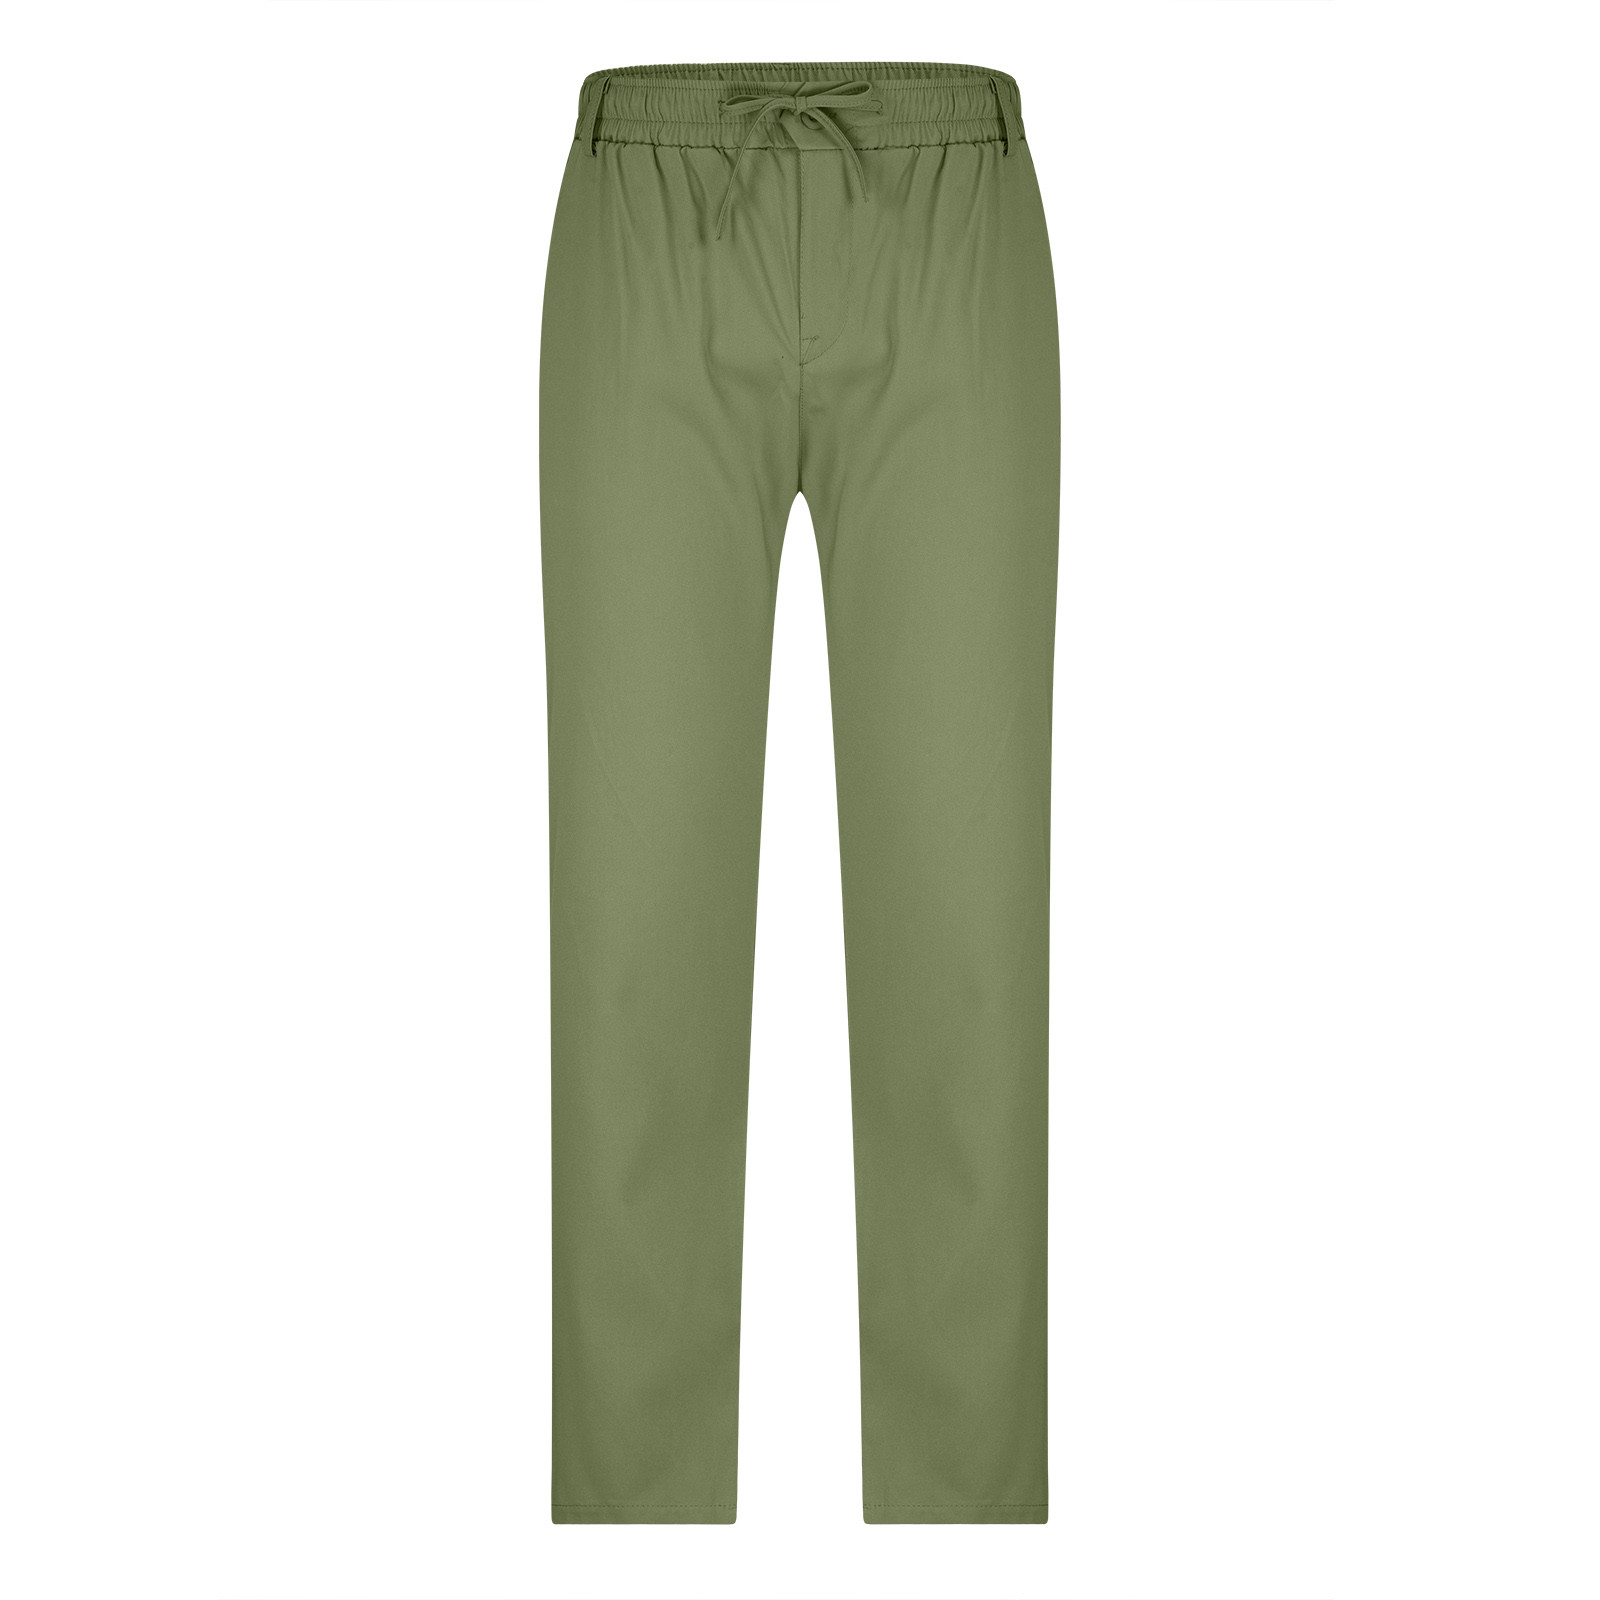 Tdoqot Chinos Pants Men- Casual Drawstring Comftable Elastic Waist Slim Cotton Mens Pants Army Green - image 5 of 6